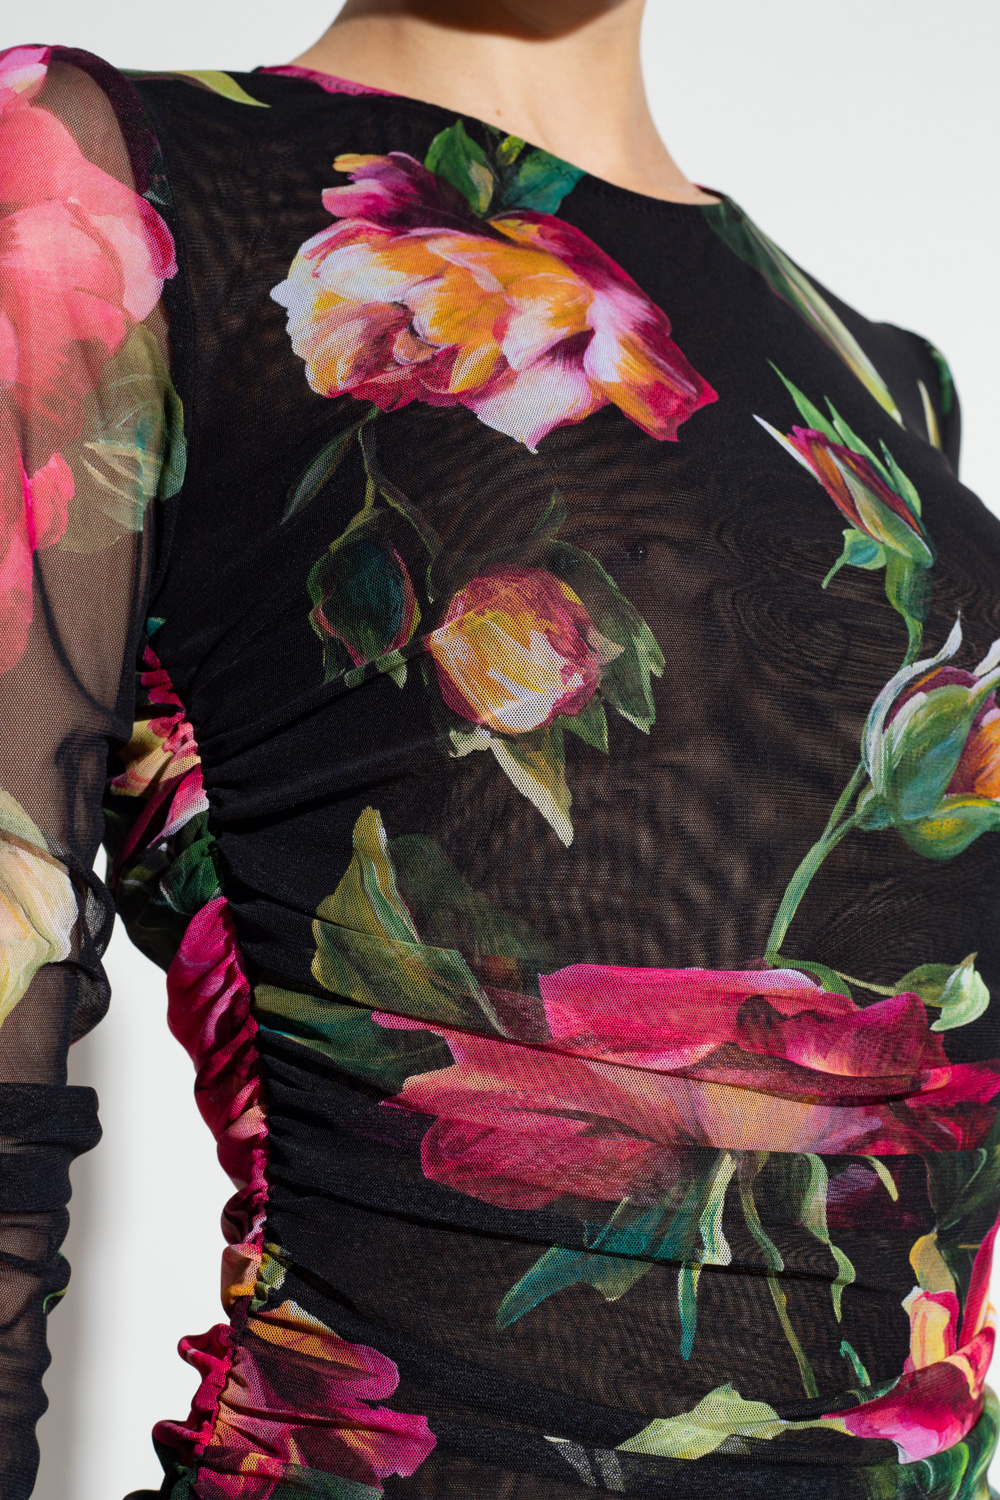 Dolce & Gabbana crew-neck cashmere jumper Floral dress